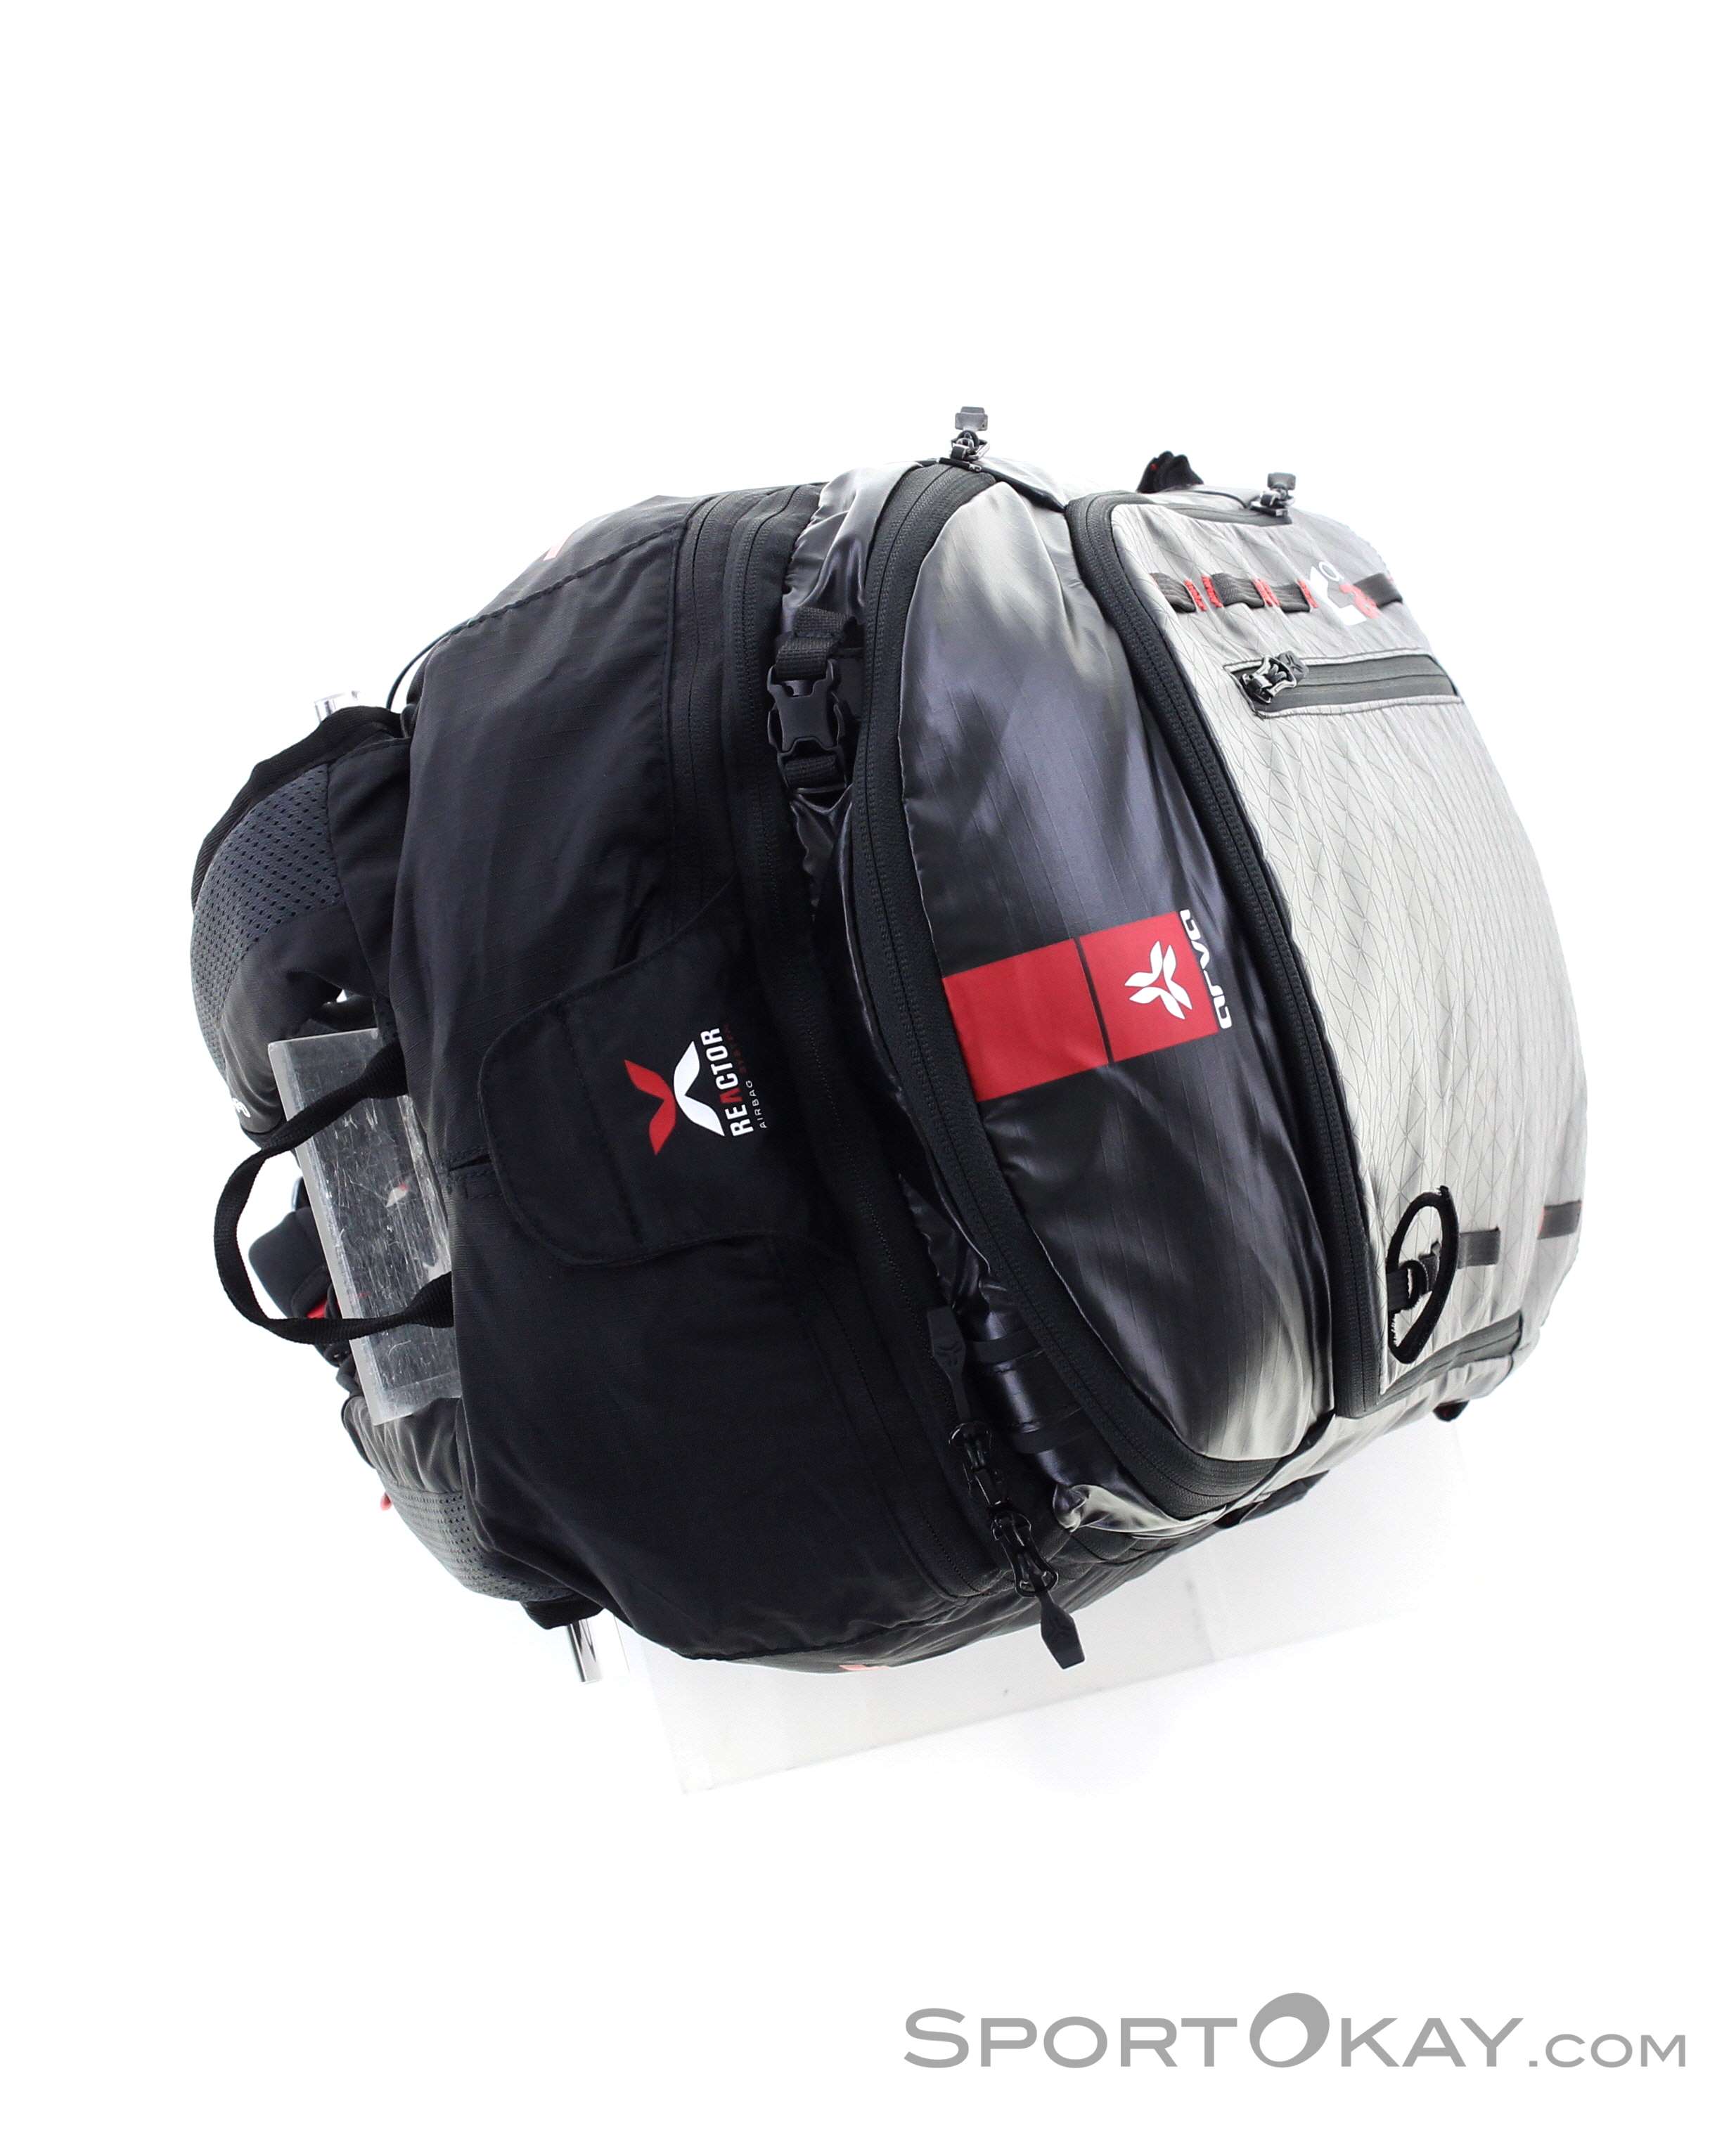 ARVA Rescuer 32 Pro V2 ski mountaineering backpack